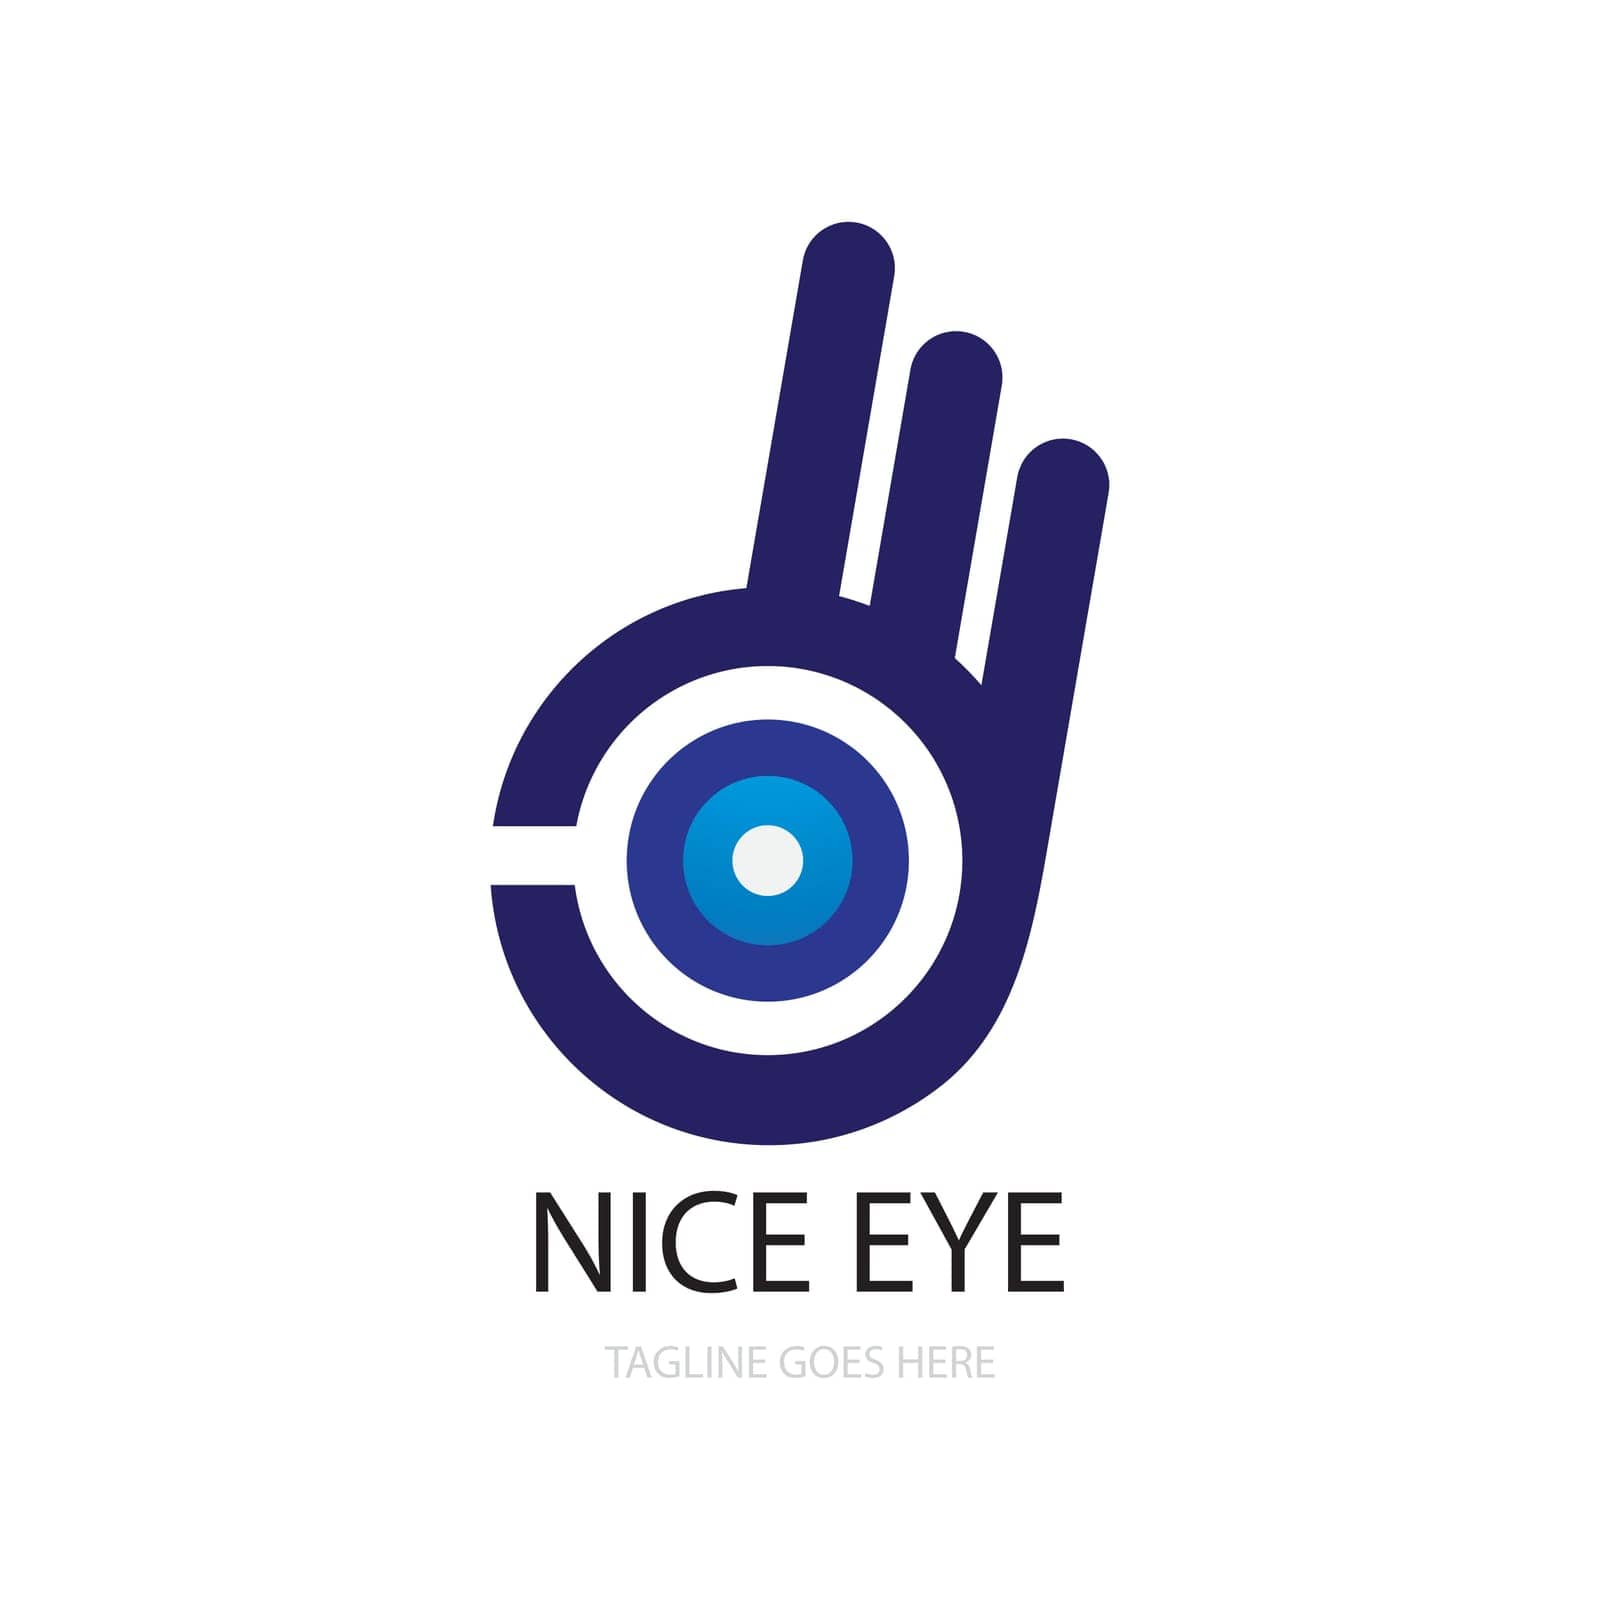 nice eye logo vector by ABD03